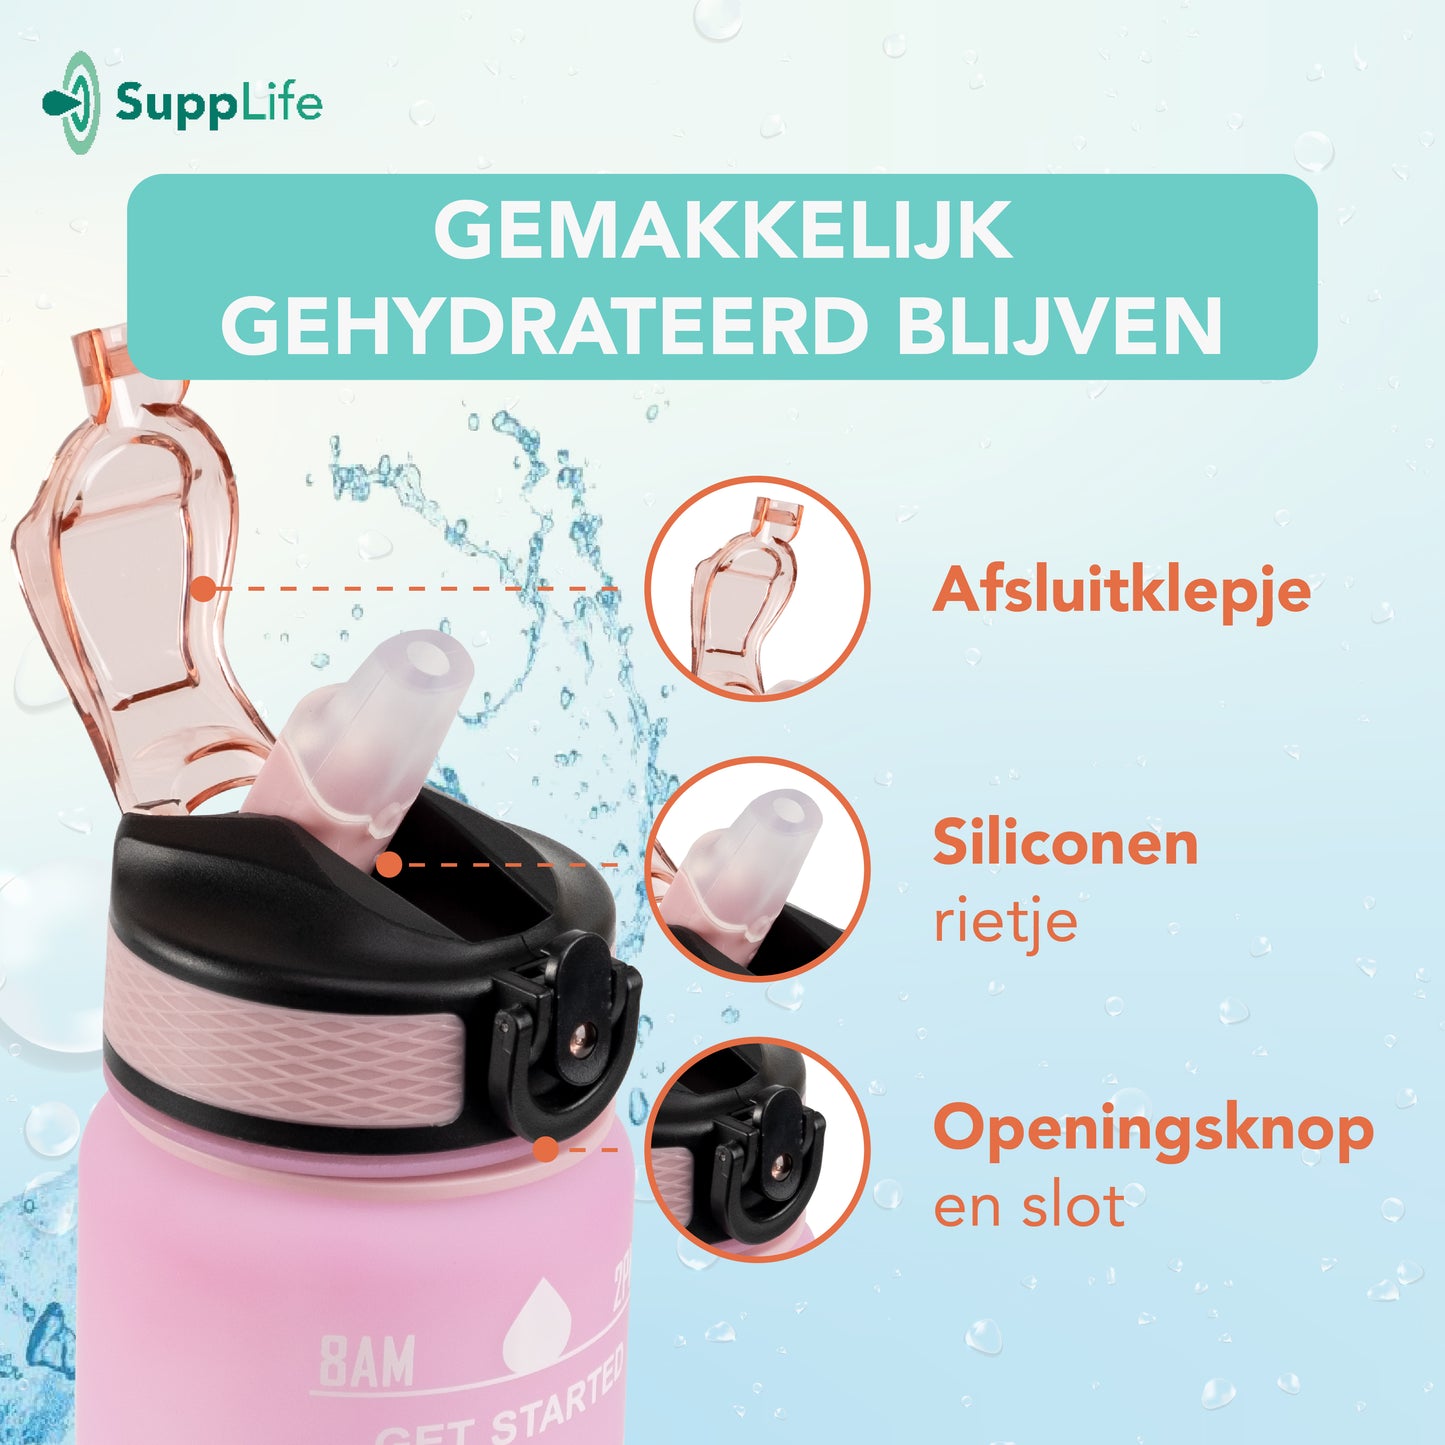 Supplife Motivatie Waterfles Pink Aqua - 1 Liter